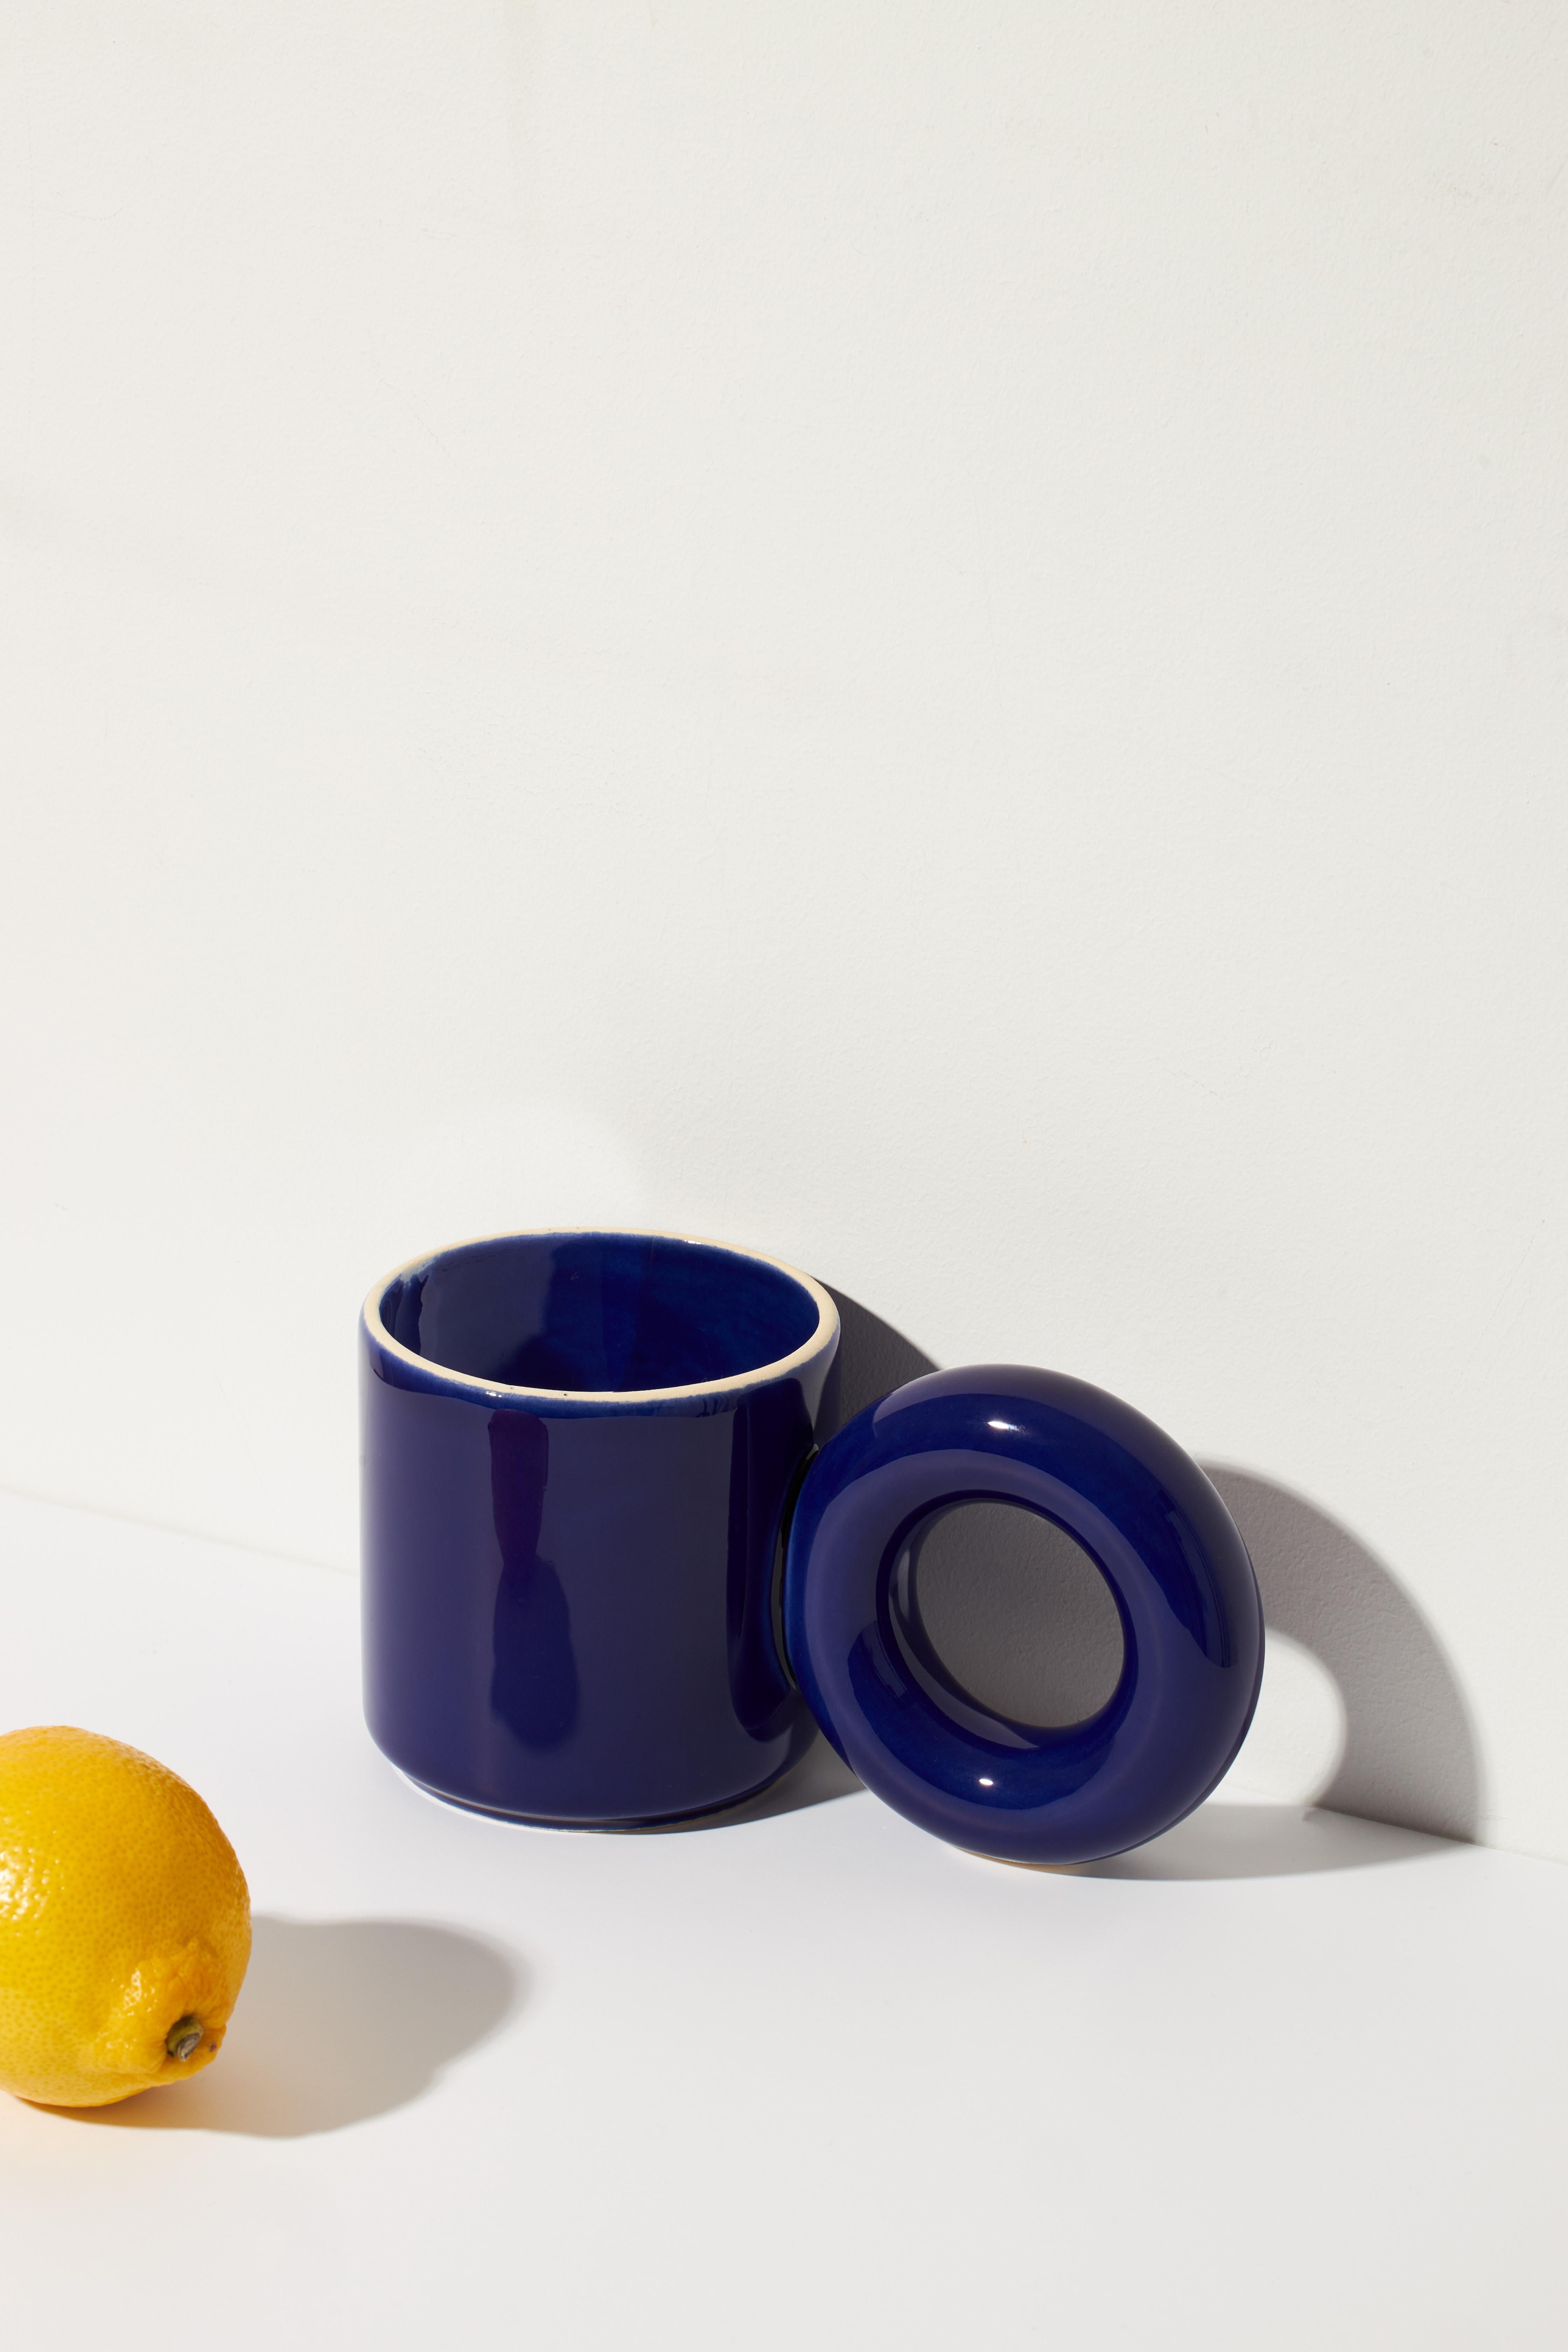 Perfect breakfast set; plate, UCHO mug and egg holder JULA by Malwina Konopacka. 